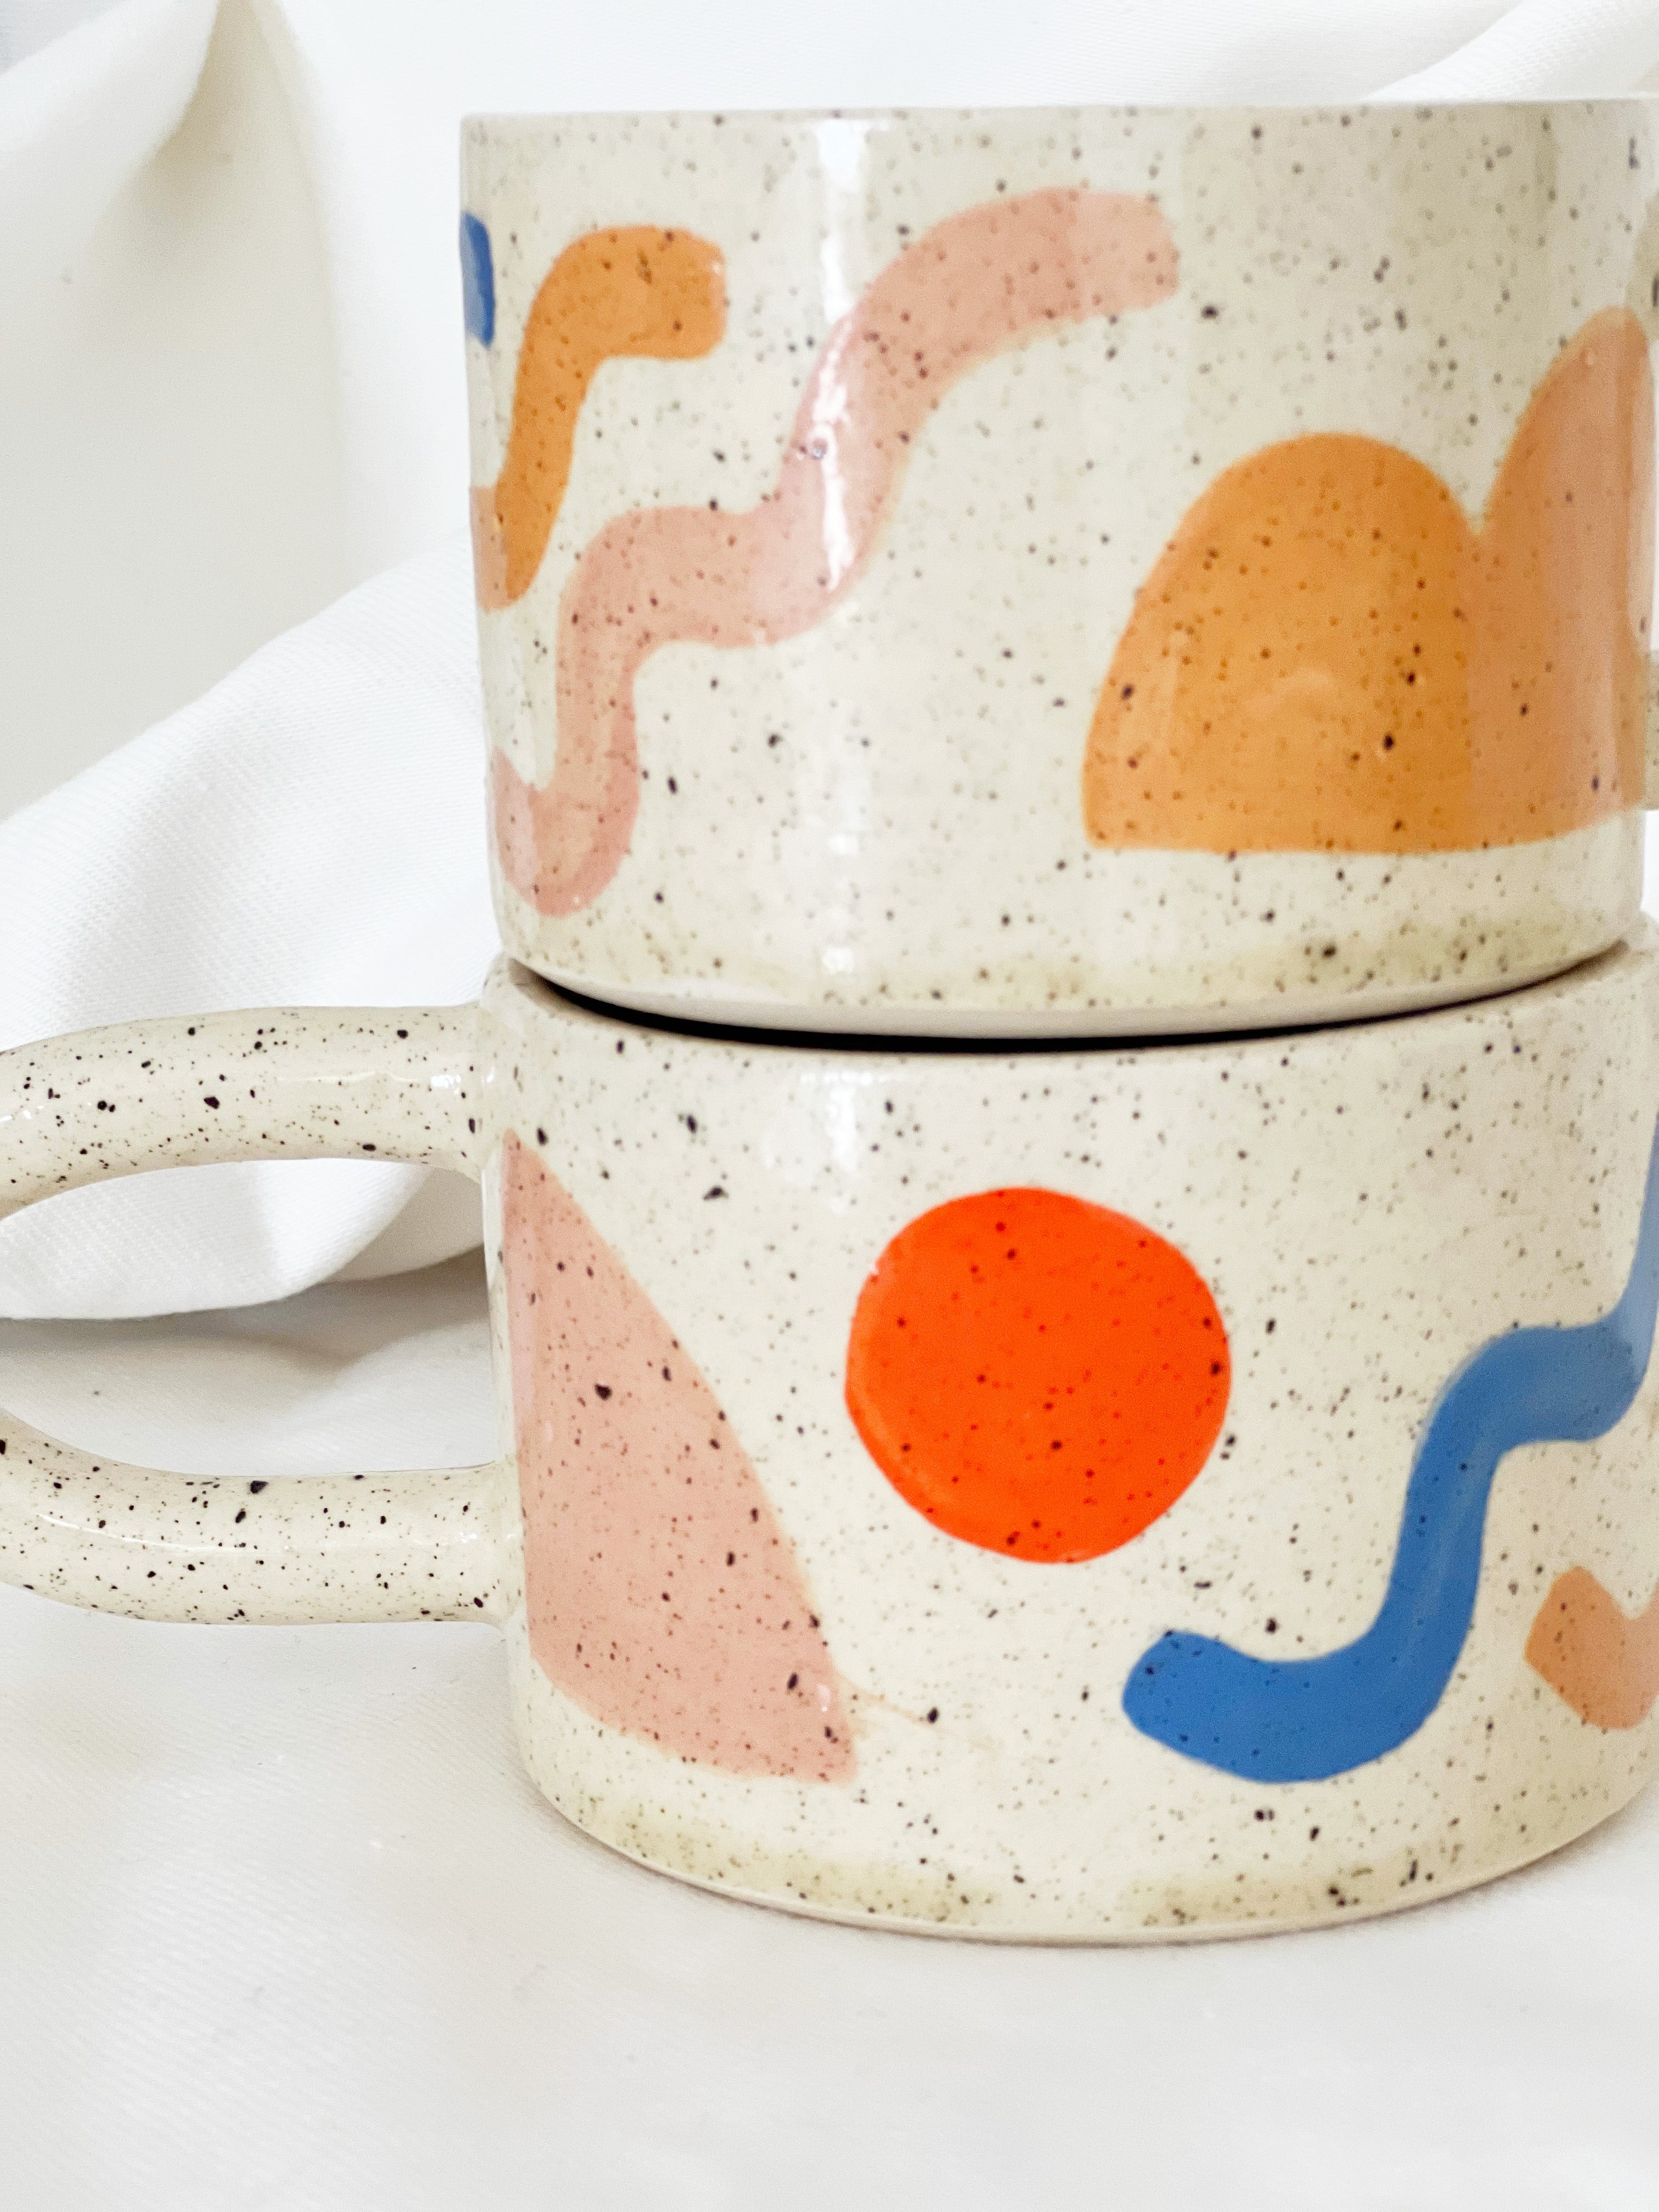 Wide Hand-painted Sprinkle on White Mug